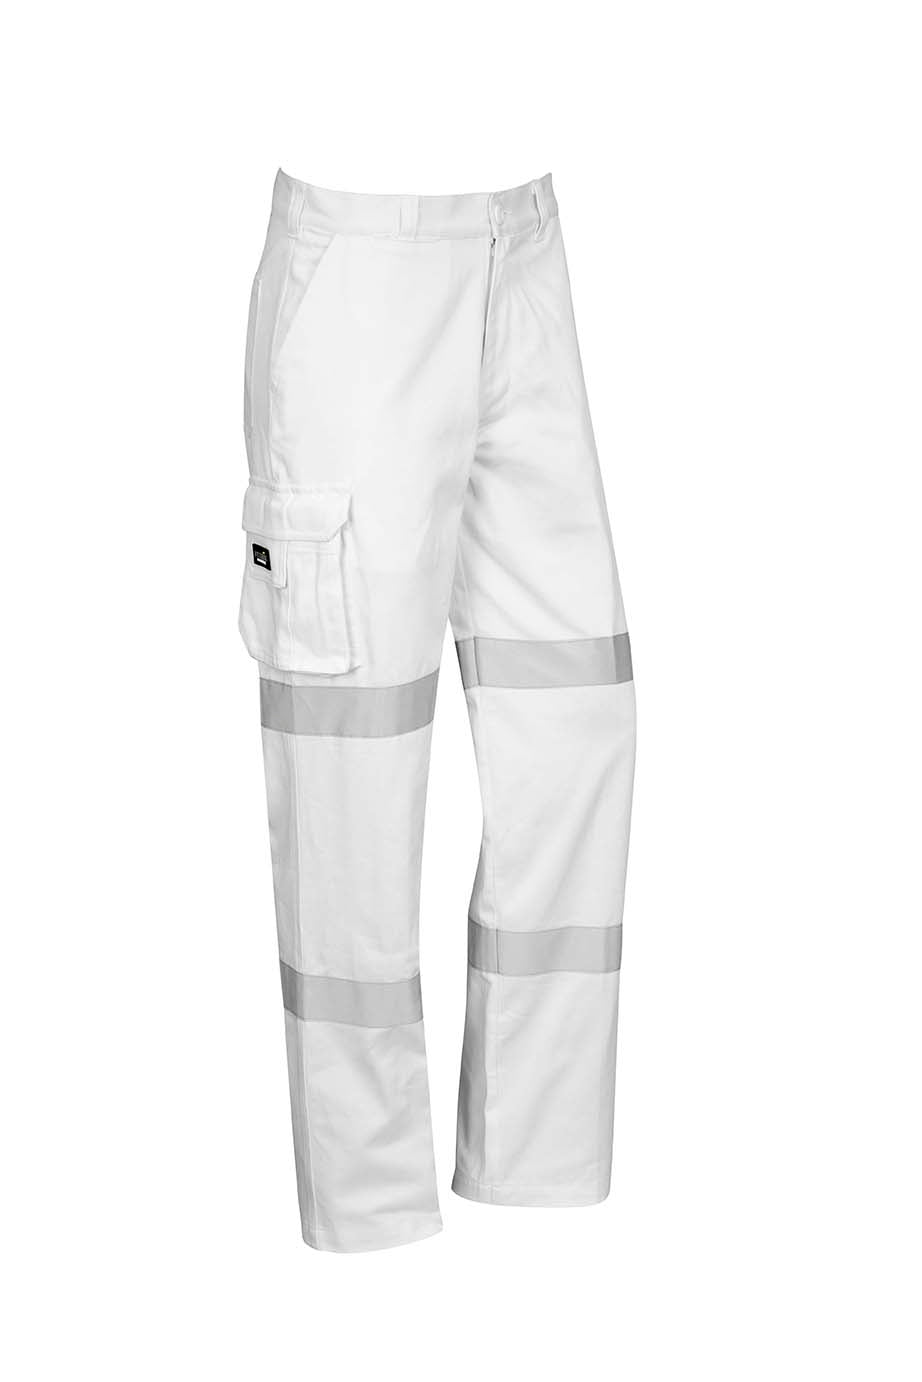 Syzmik - ZP920 White Bio Motion Night Cargo Pants